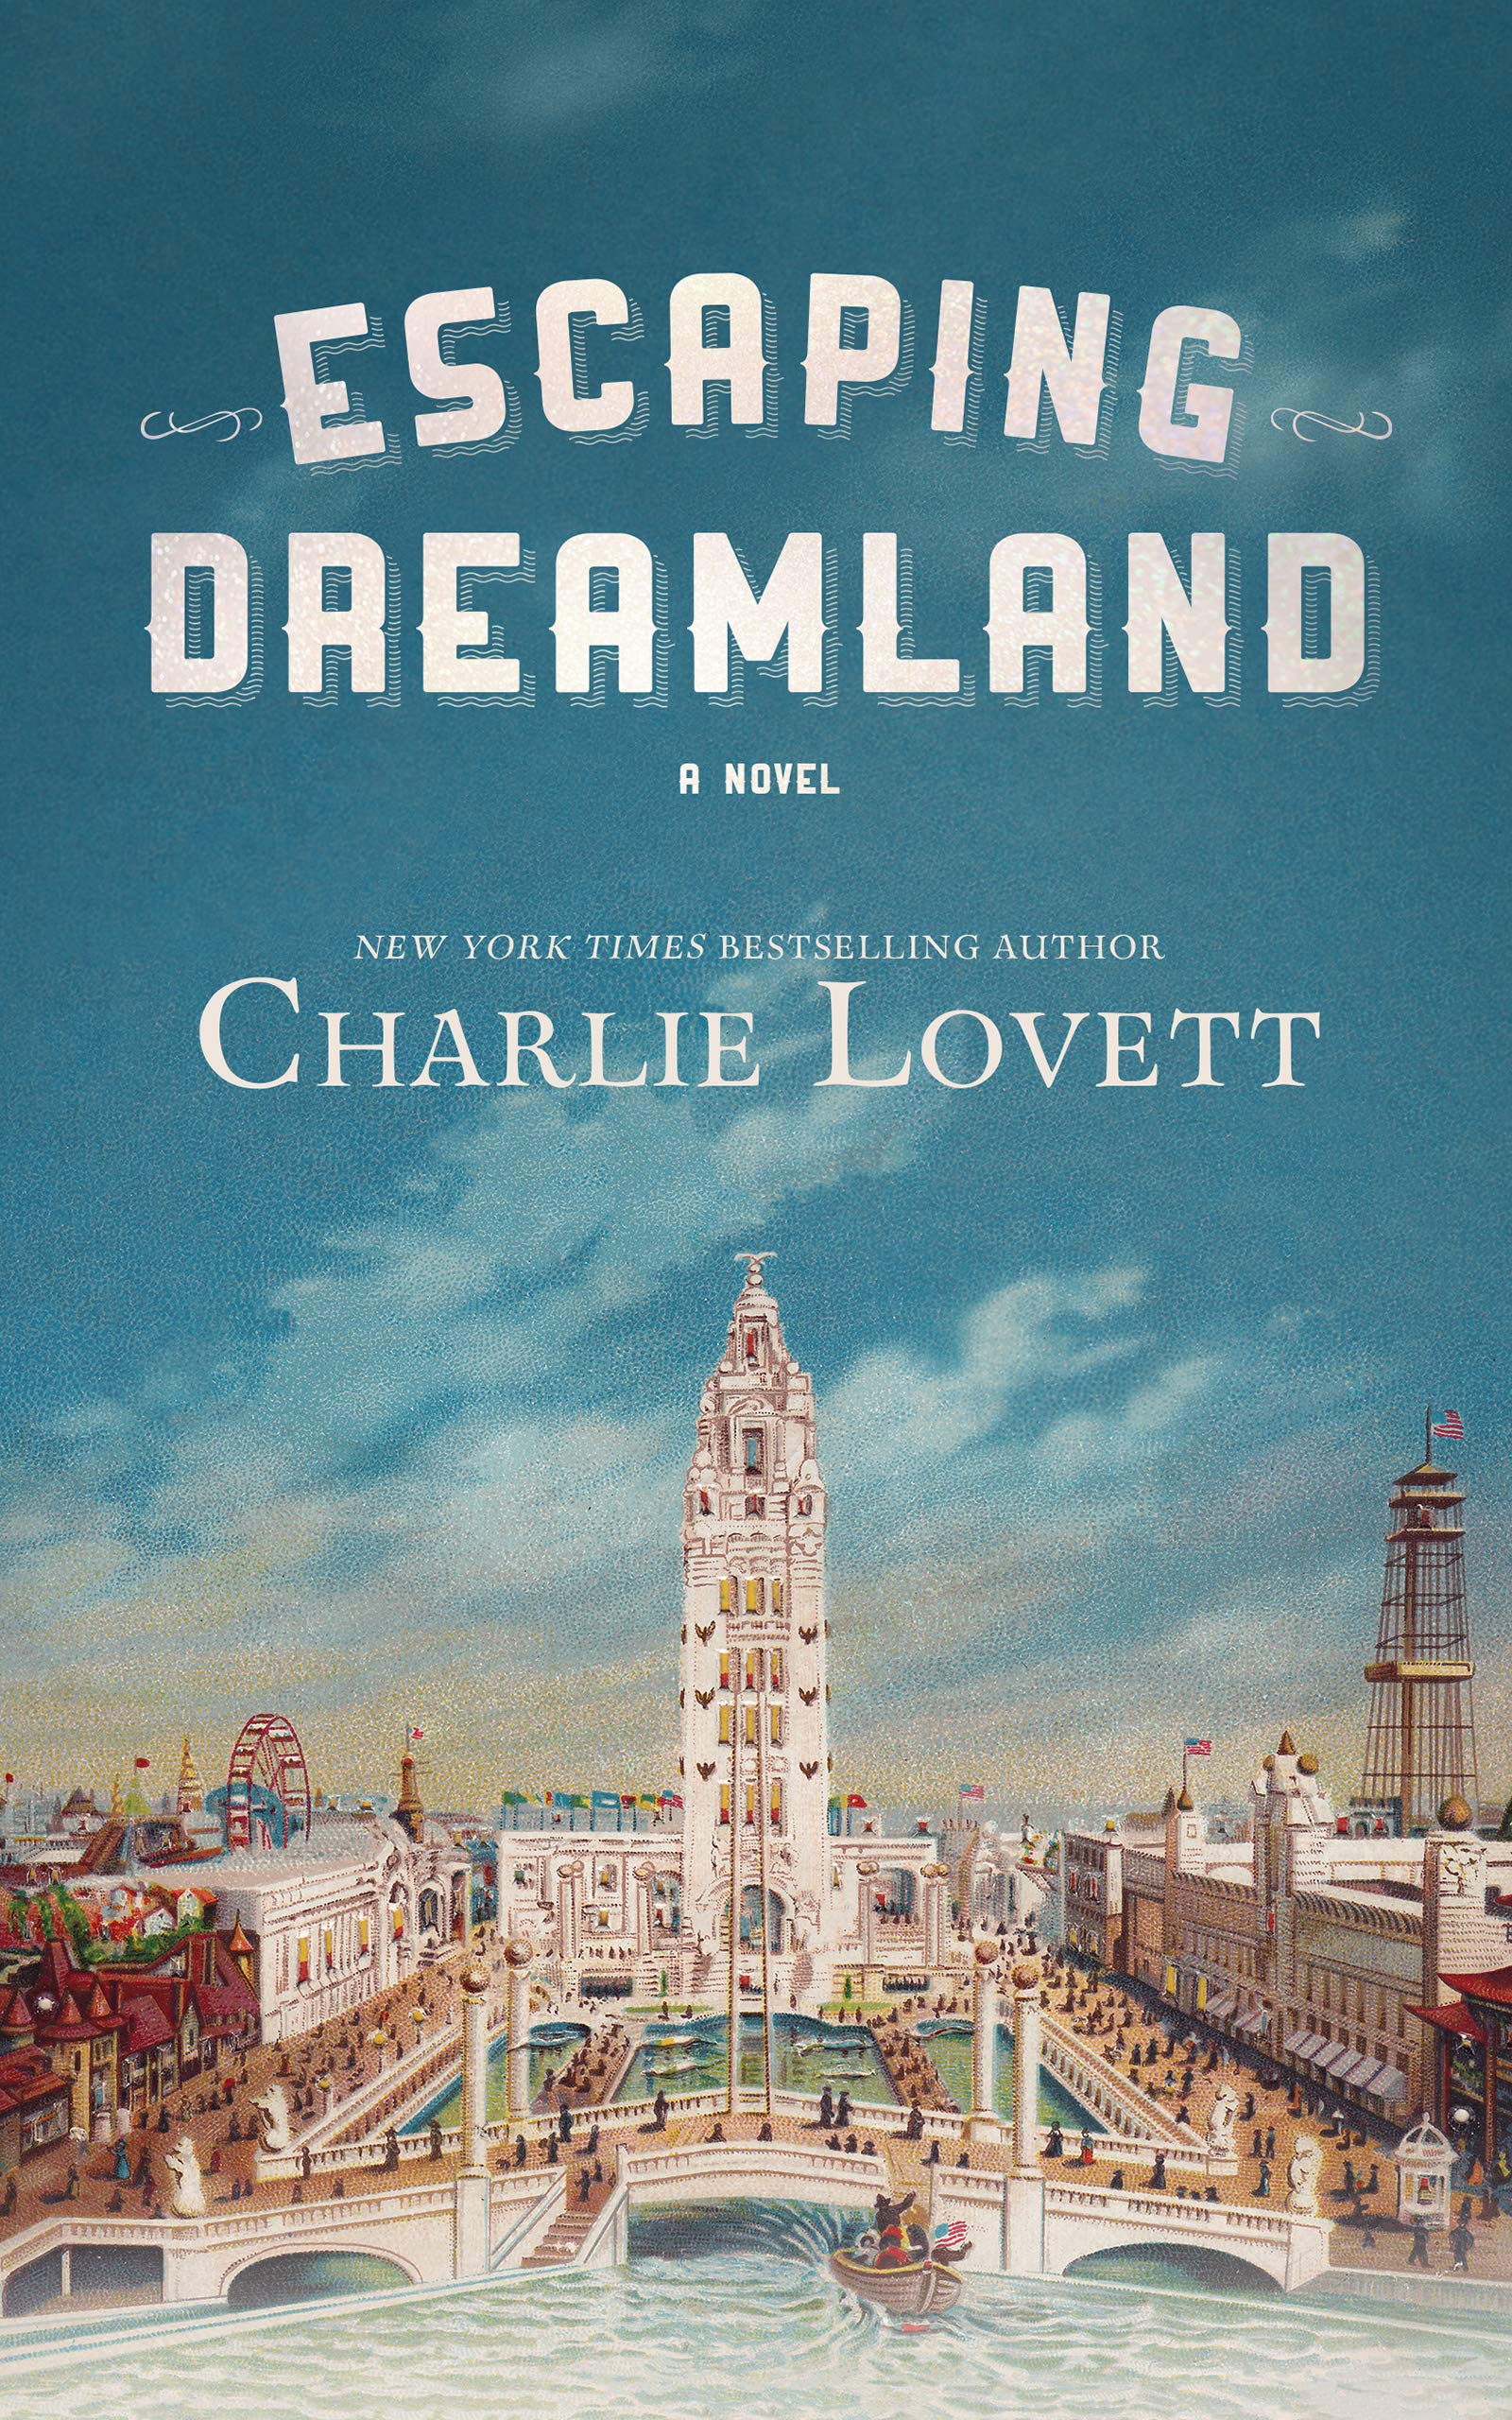 Escaping Dreamland: A Novel